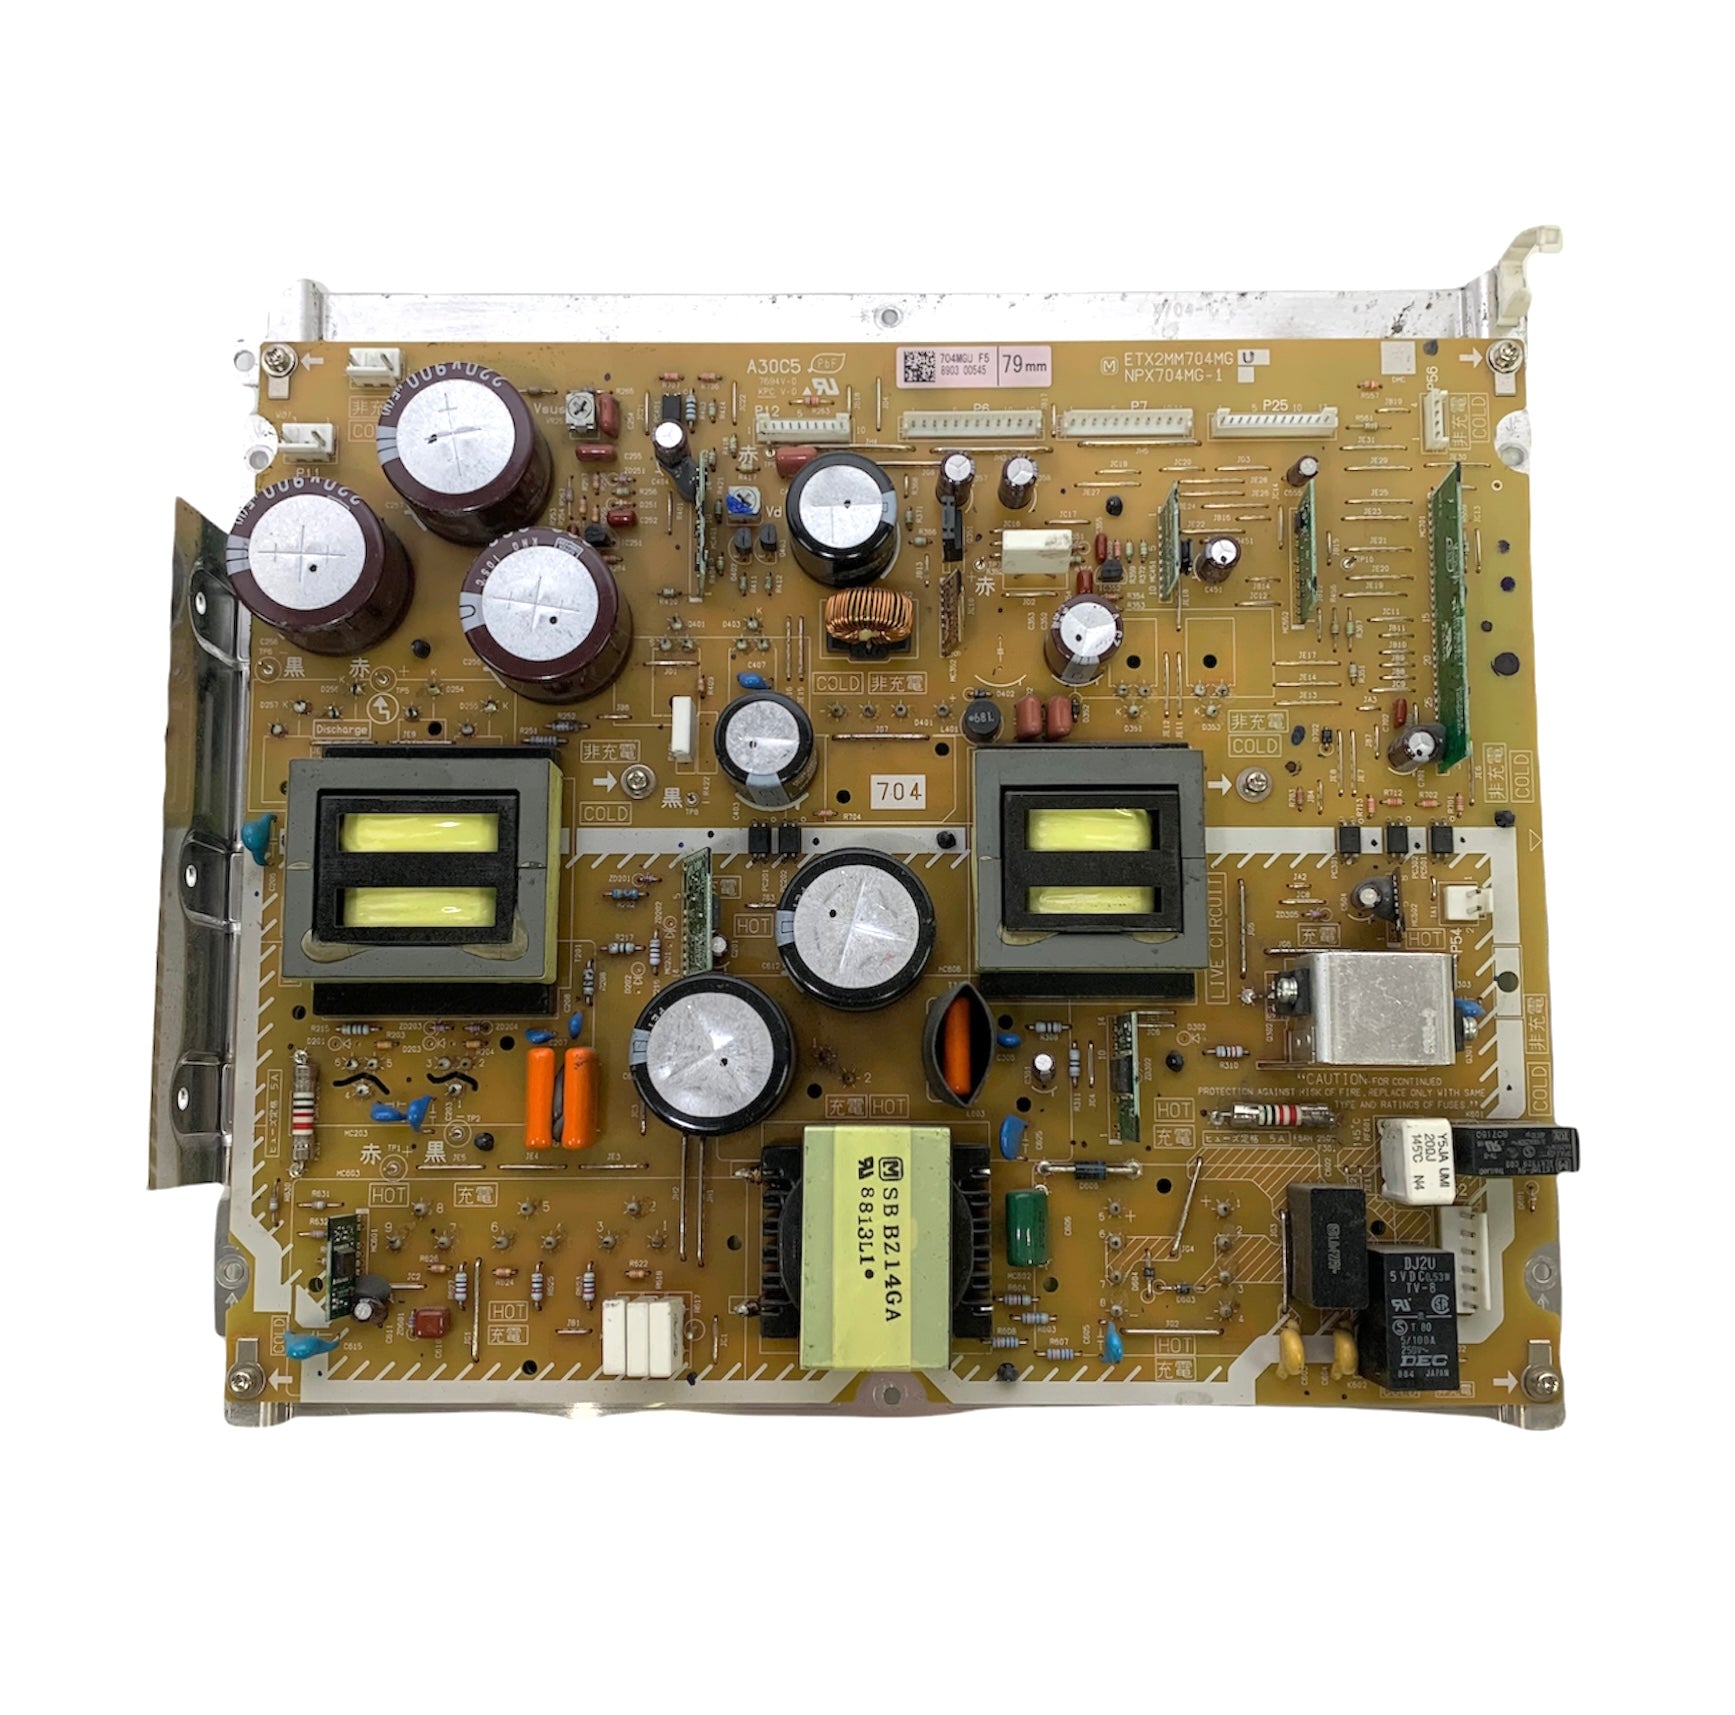 Panasonic ETX2MM704MGU (NPX704MG-1) Power Supply Unit